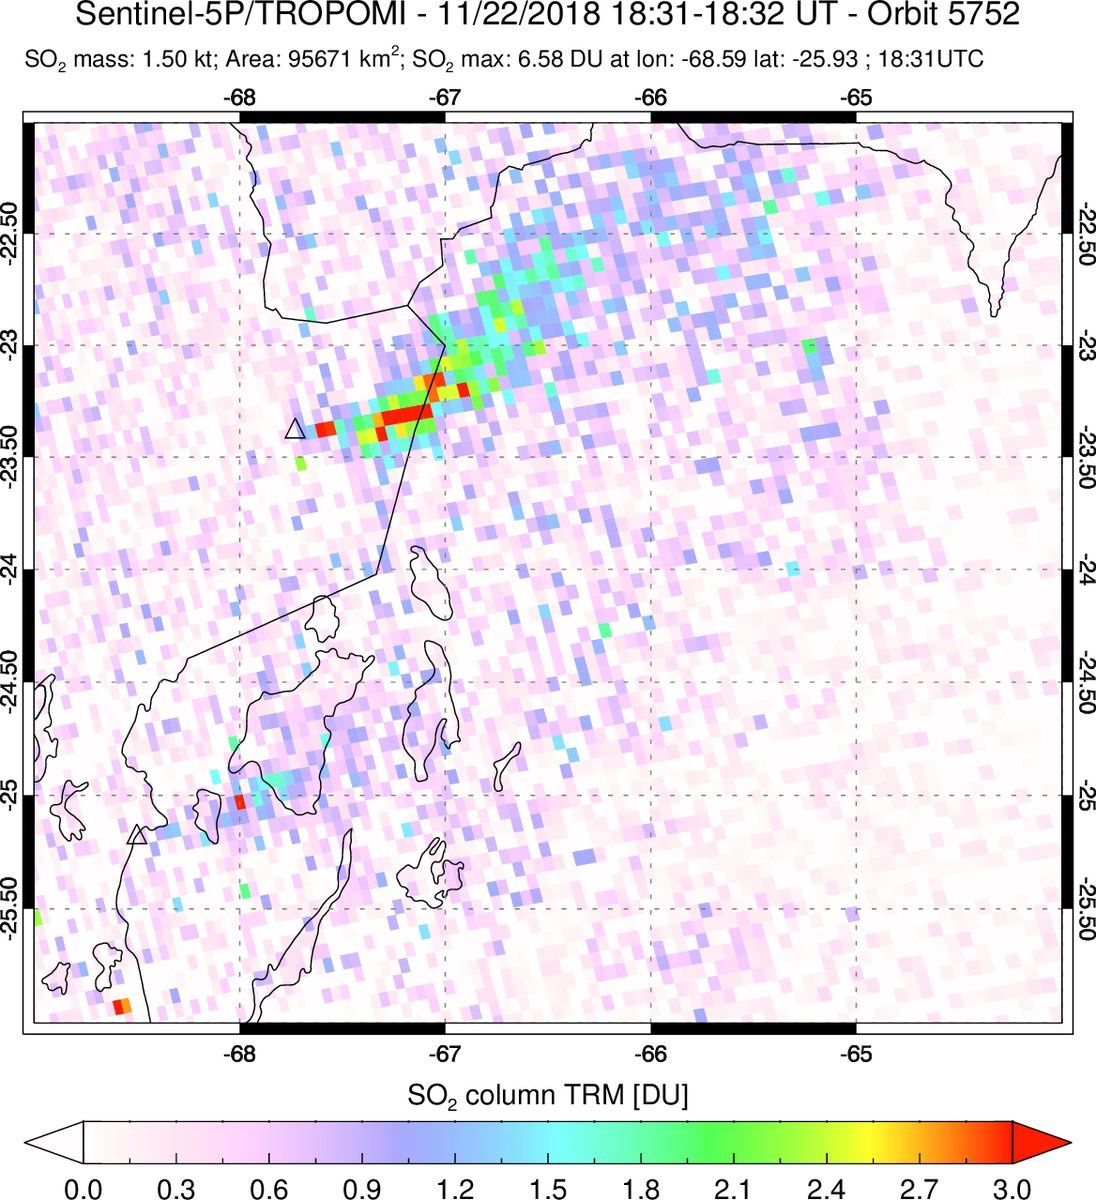 Lascar - sulfur dioxide emissions on 22.11.2018 - image Sentinel 5P Tropomi via Simon Carn